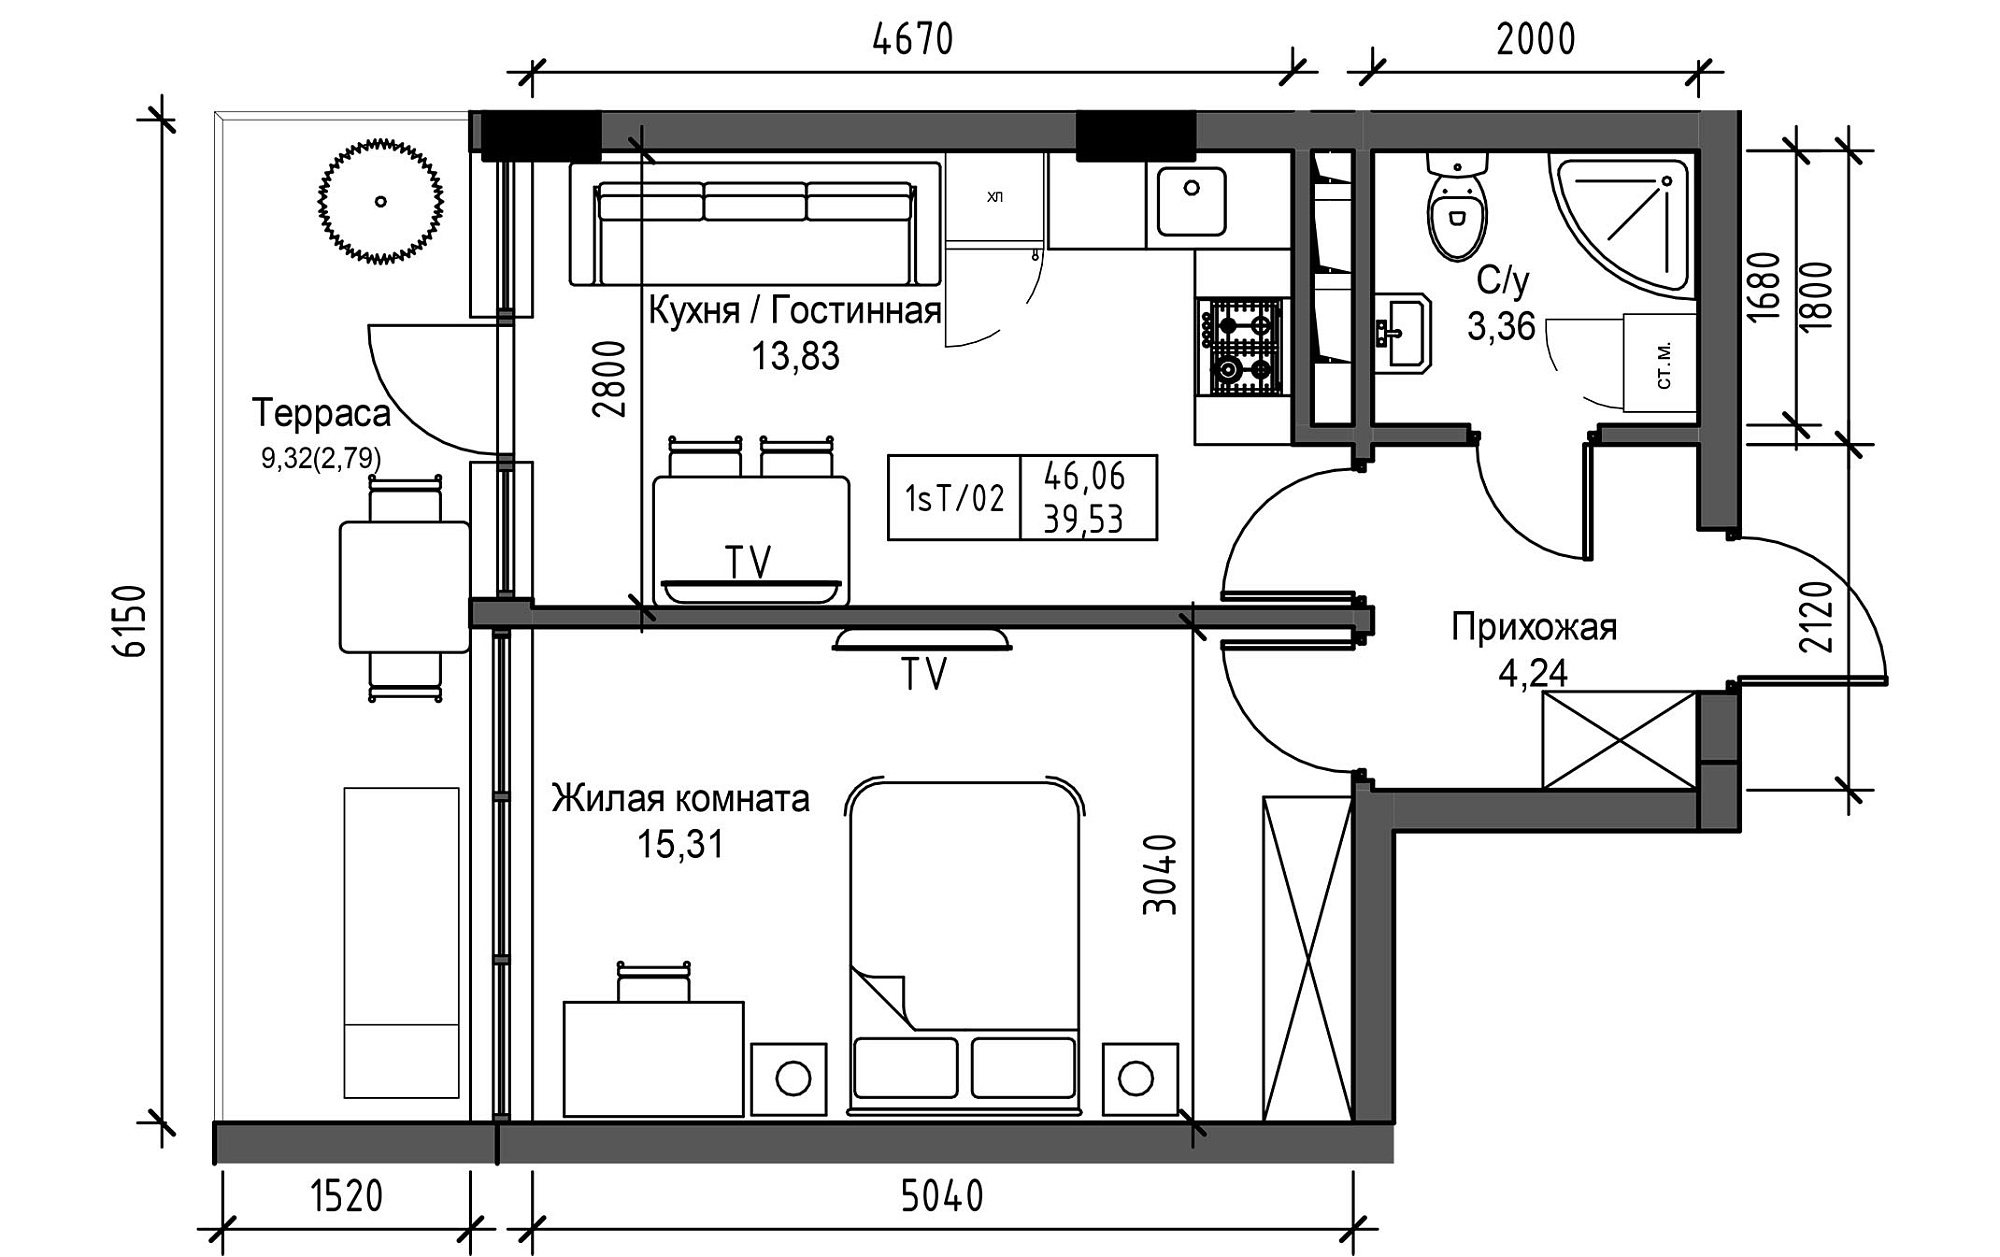 Планування 1-к квартира площею 39.53м2, UM-003-04/0027.